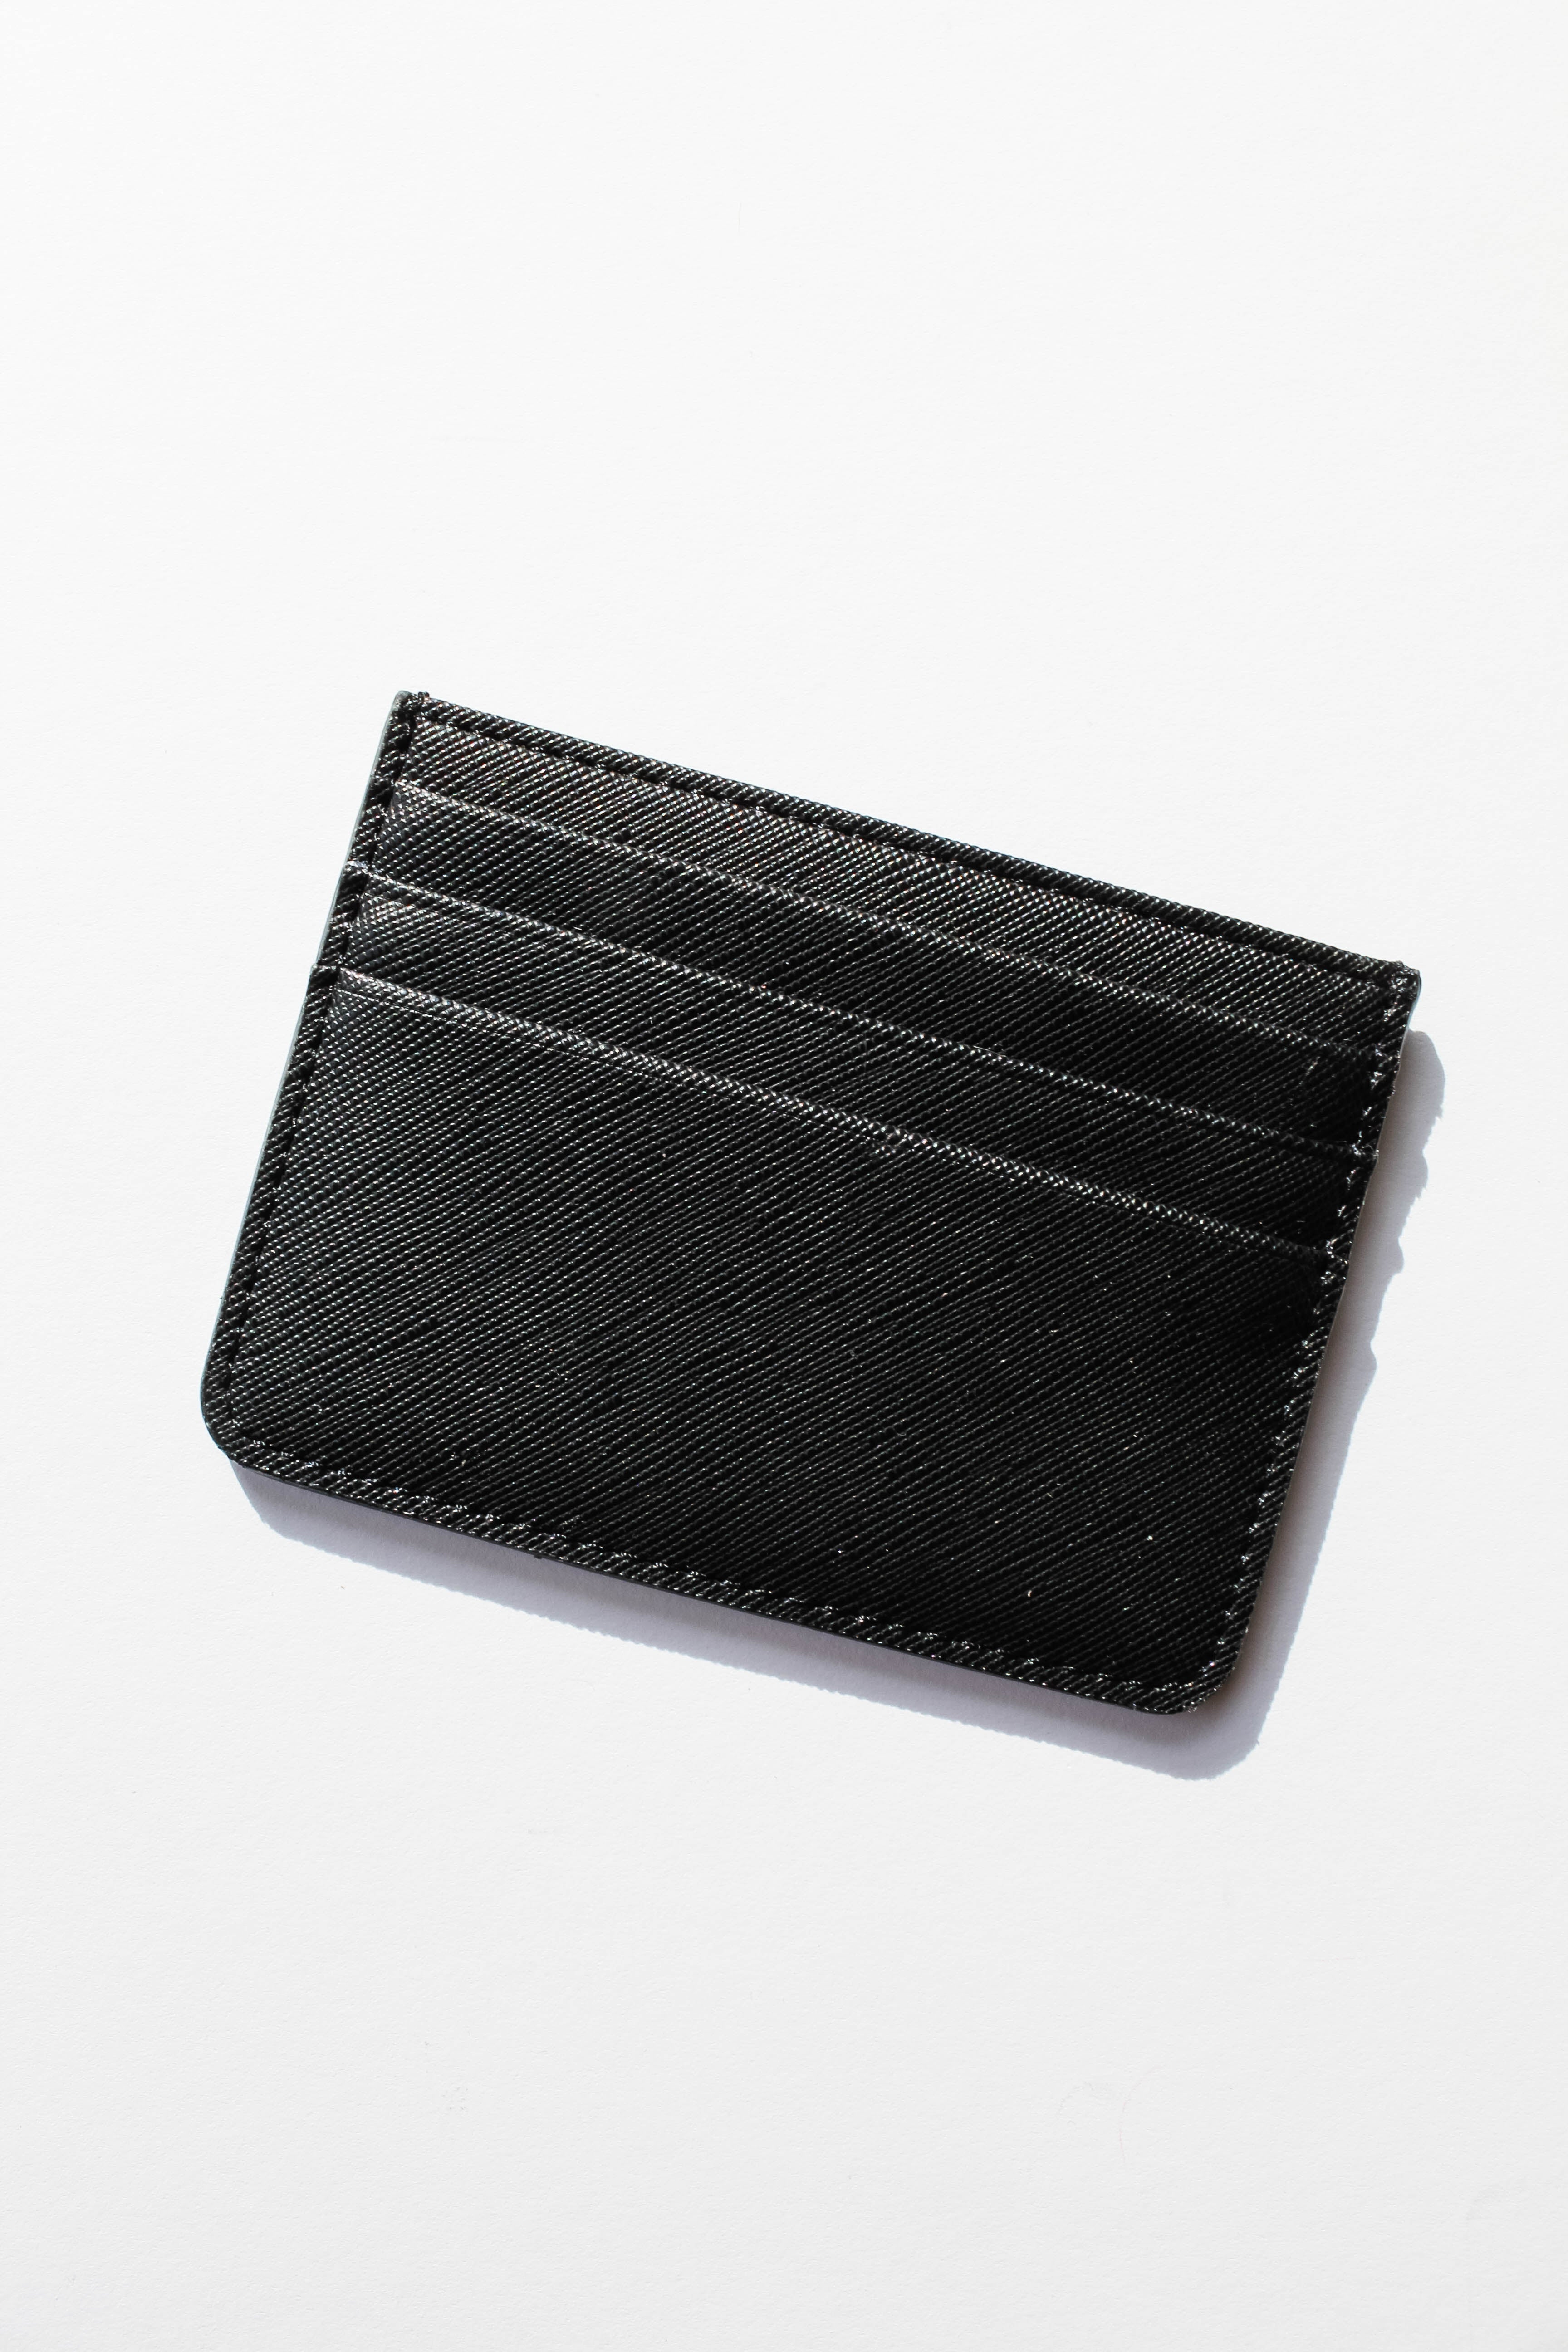 sleek saffiano leather black wallet card holder